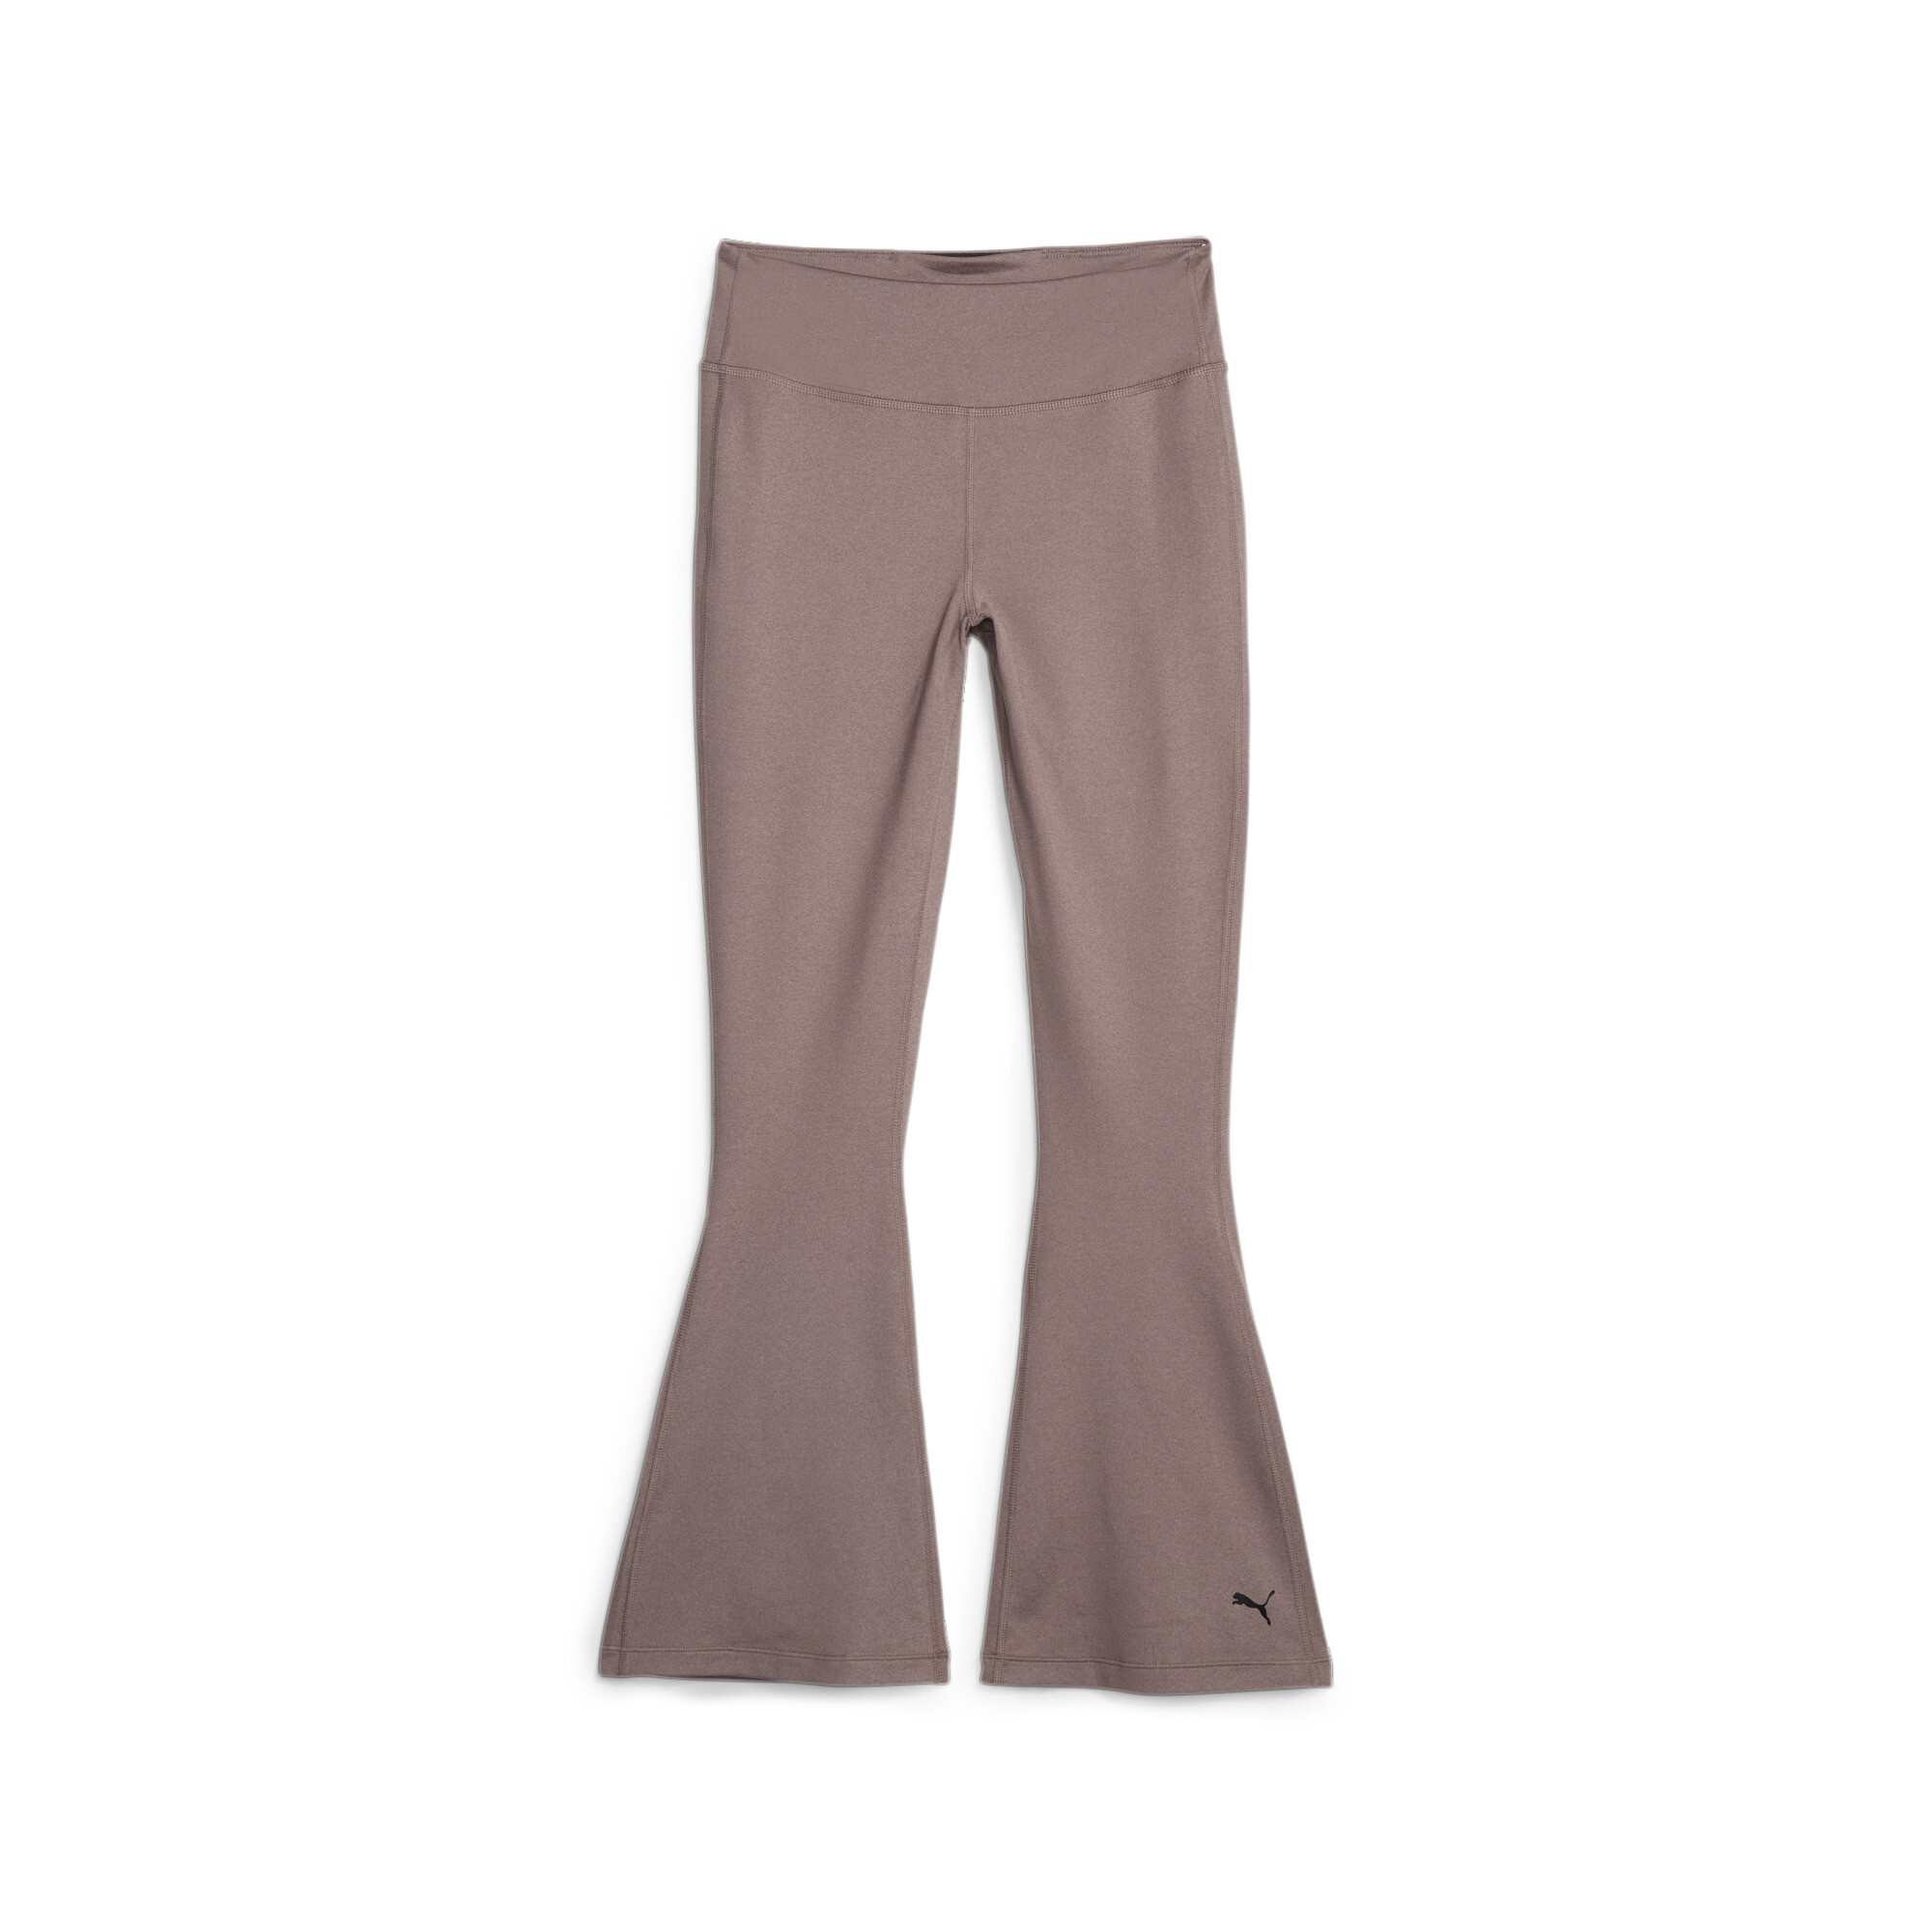 Women's PUMA STUDIO YOGINI LUXE FLARE Training Pants In Brown, Size Medium